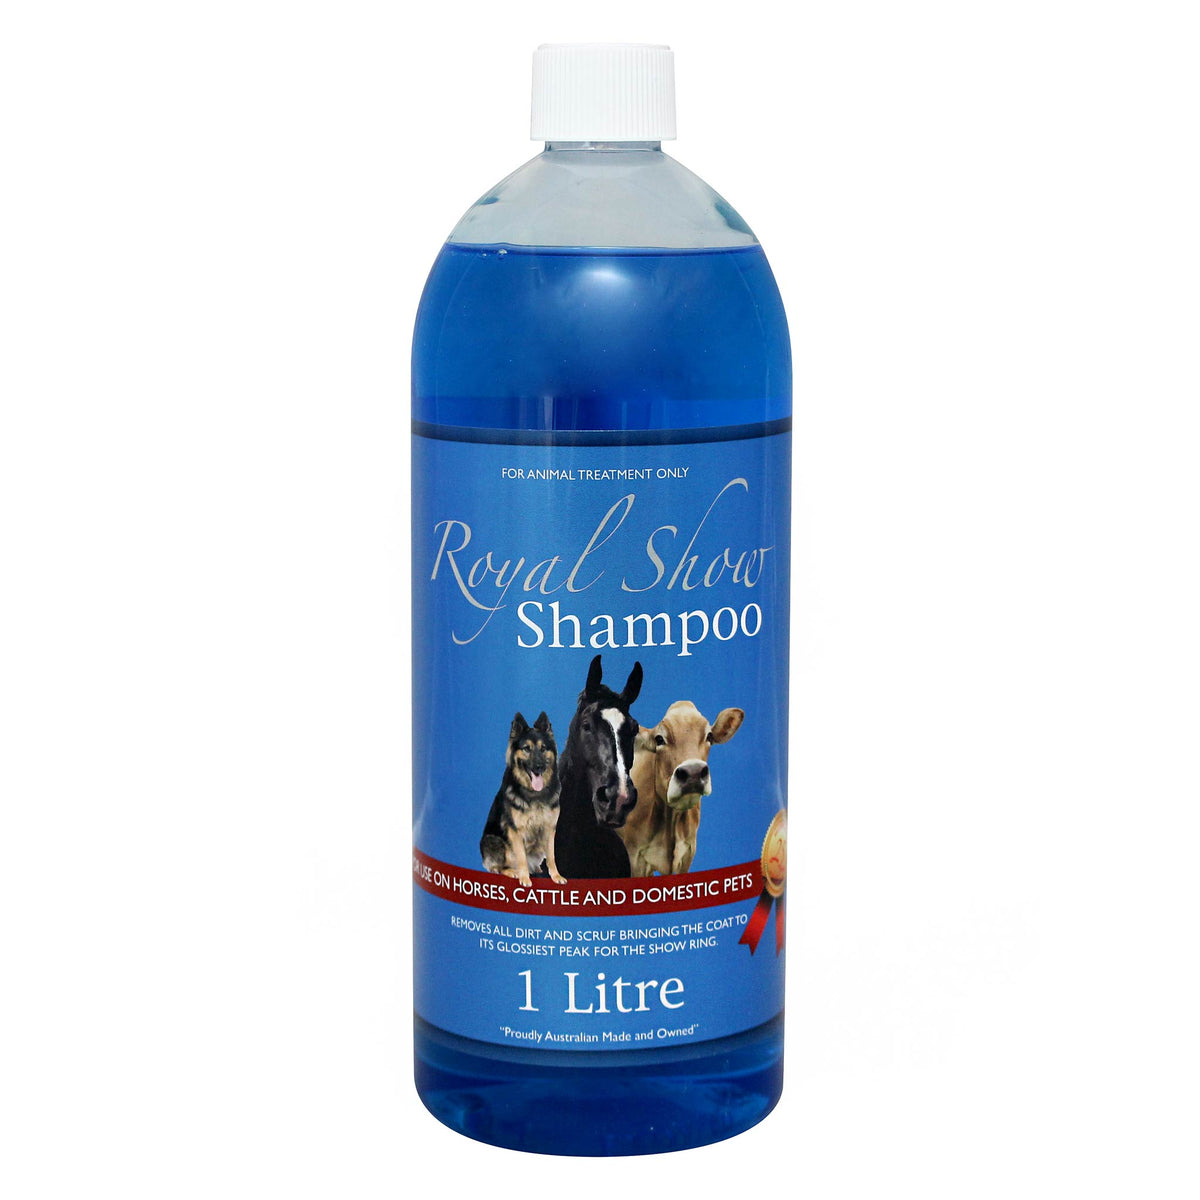 Royal Show Shampoo Regular